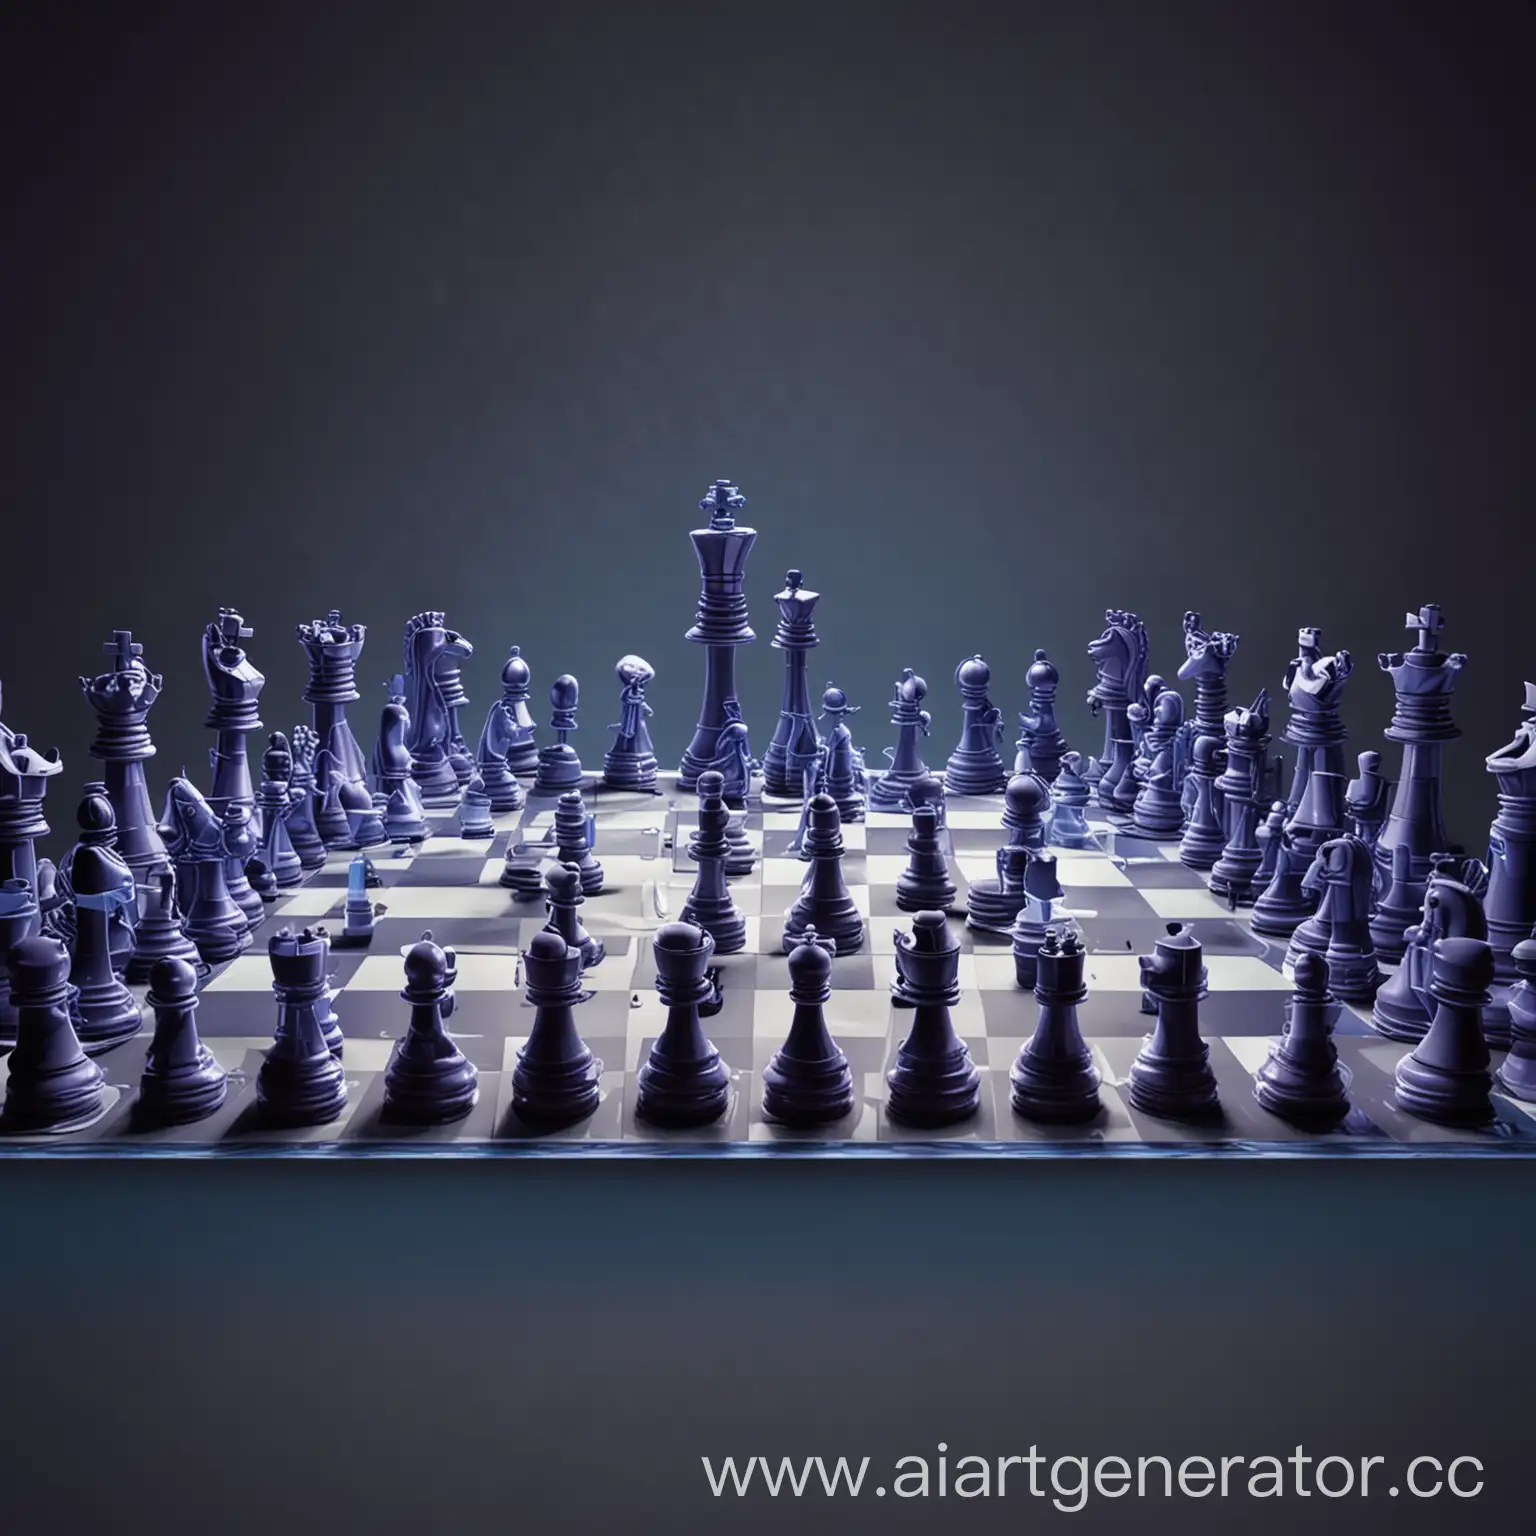 Animated-3D-Chess-Championship-in-Cinematographic-BluePurple